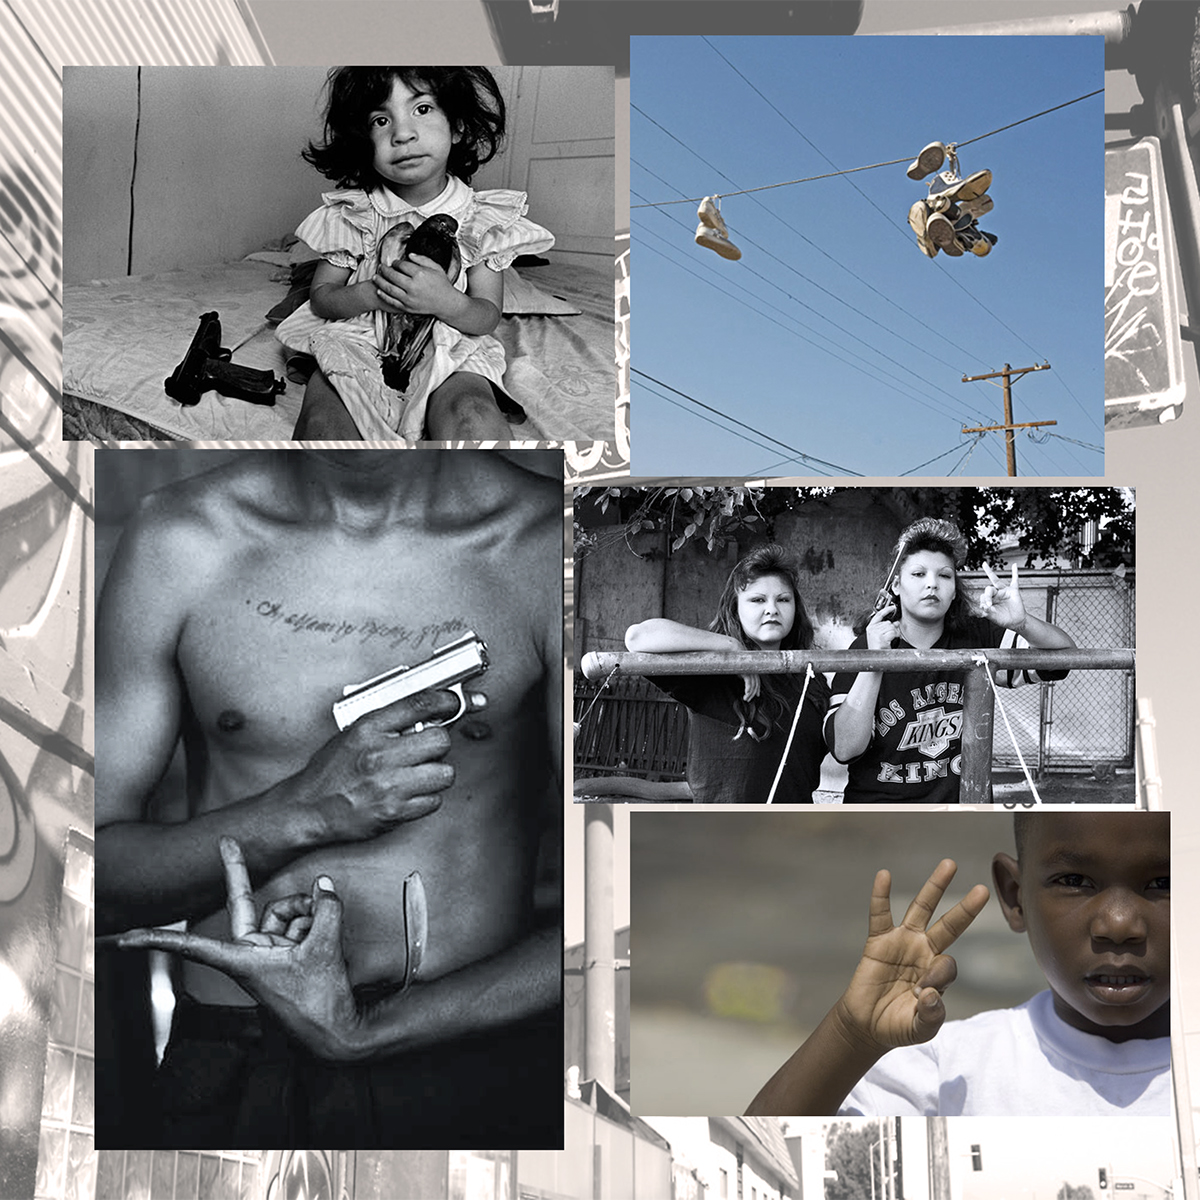 graduation project moodboard inspirations gangs Los Angeles Street violence Collection streetwear Sportswear Urbanwear hip hop culture tattoos signs codes